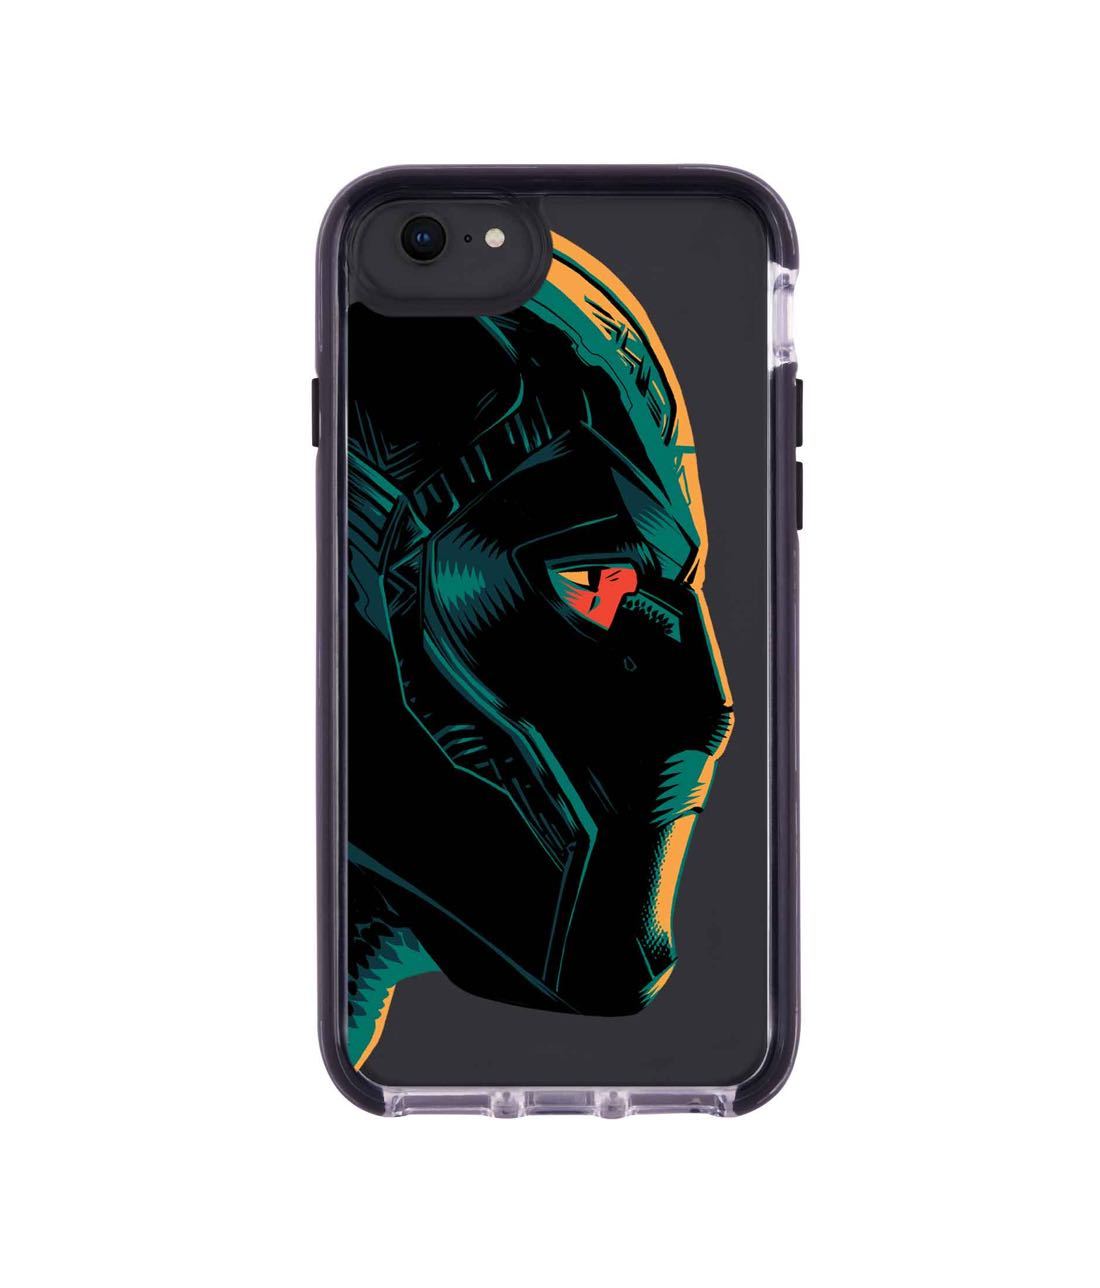 Illuminated Black Panther - Extreme Phone Case for iPhone 8